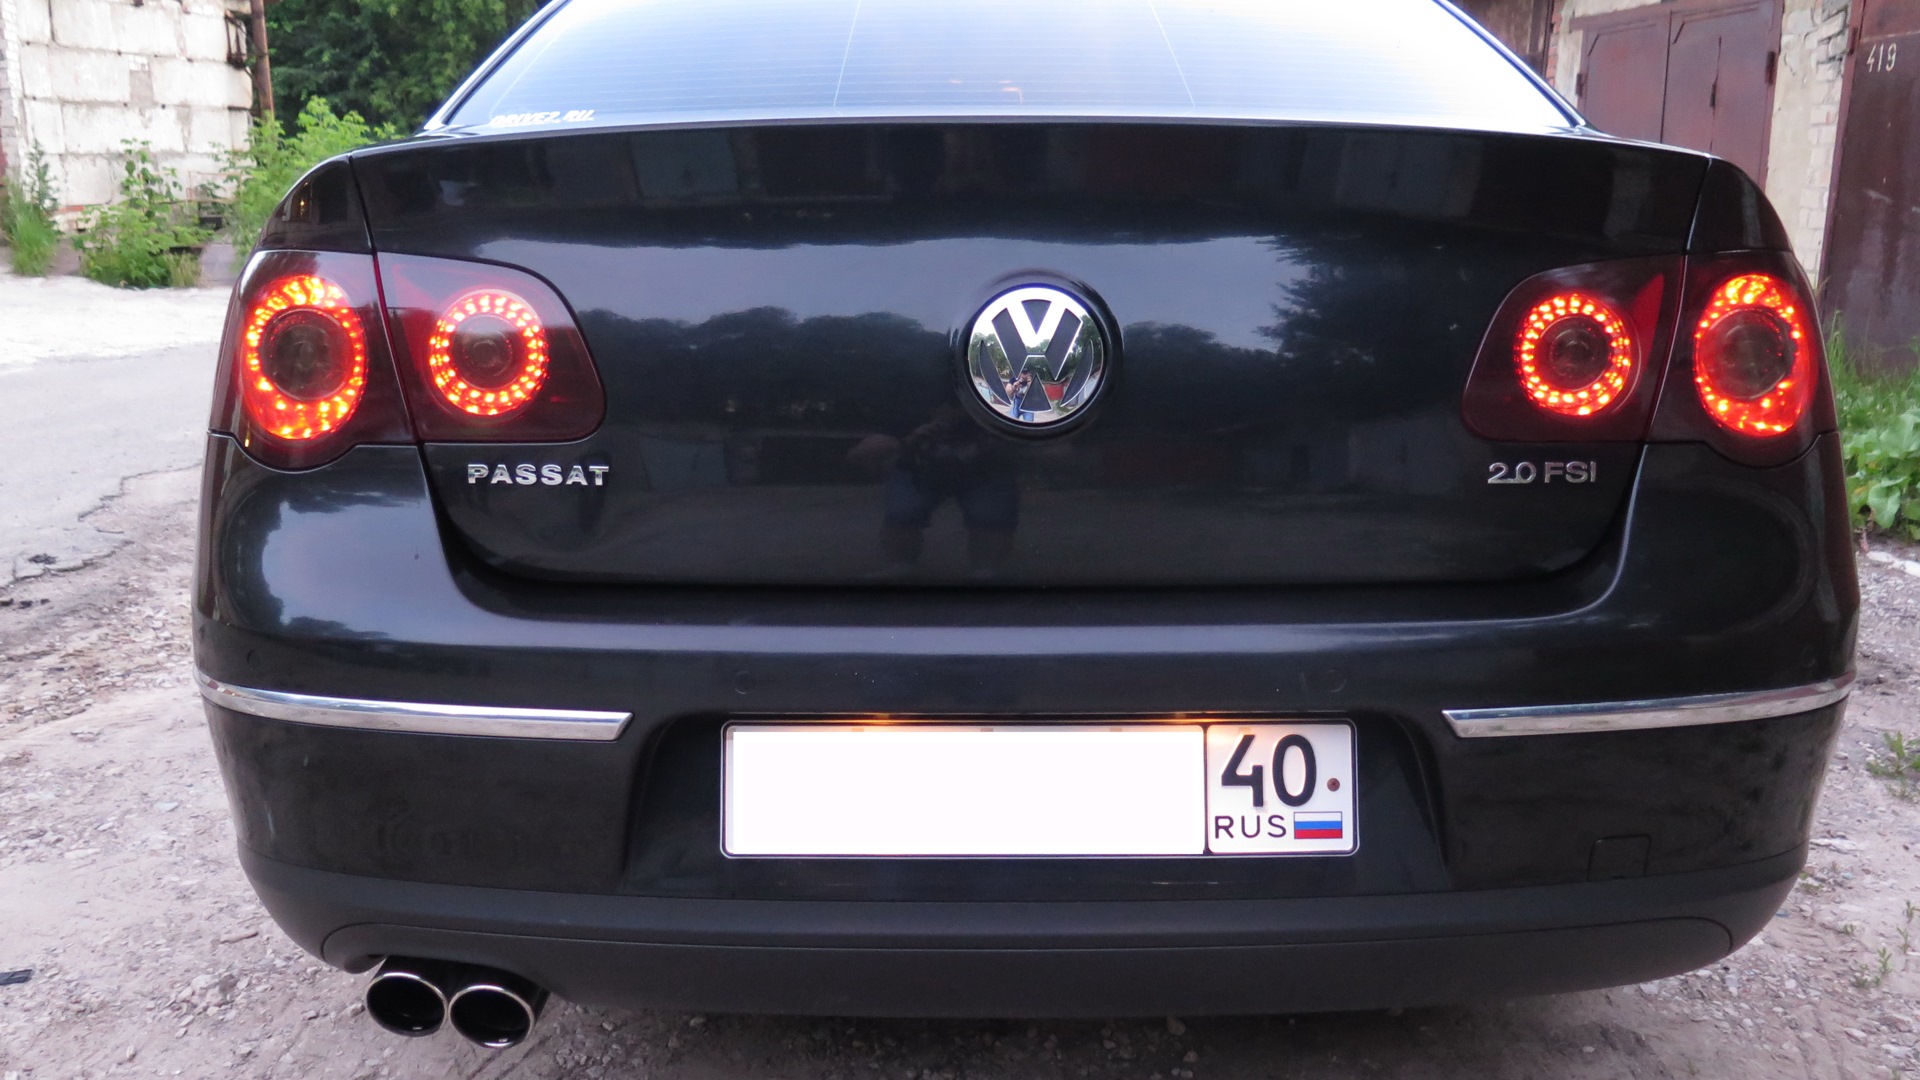 Фонари пассат б6. Задние фонари Volkswagen Passat b6. Passat СС b6 задние фонари. Volkswagen Passat b6 тонированные фары.